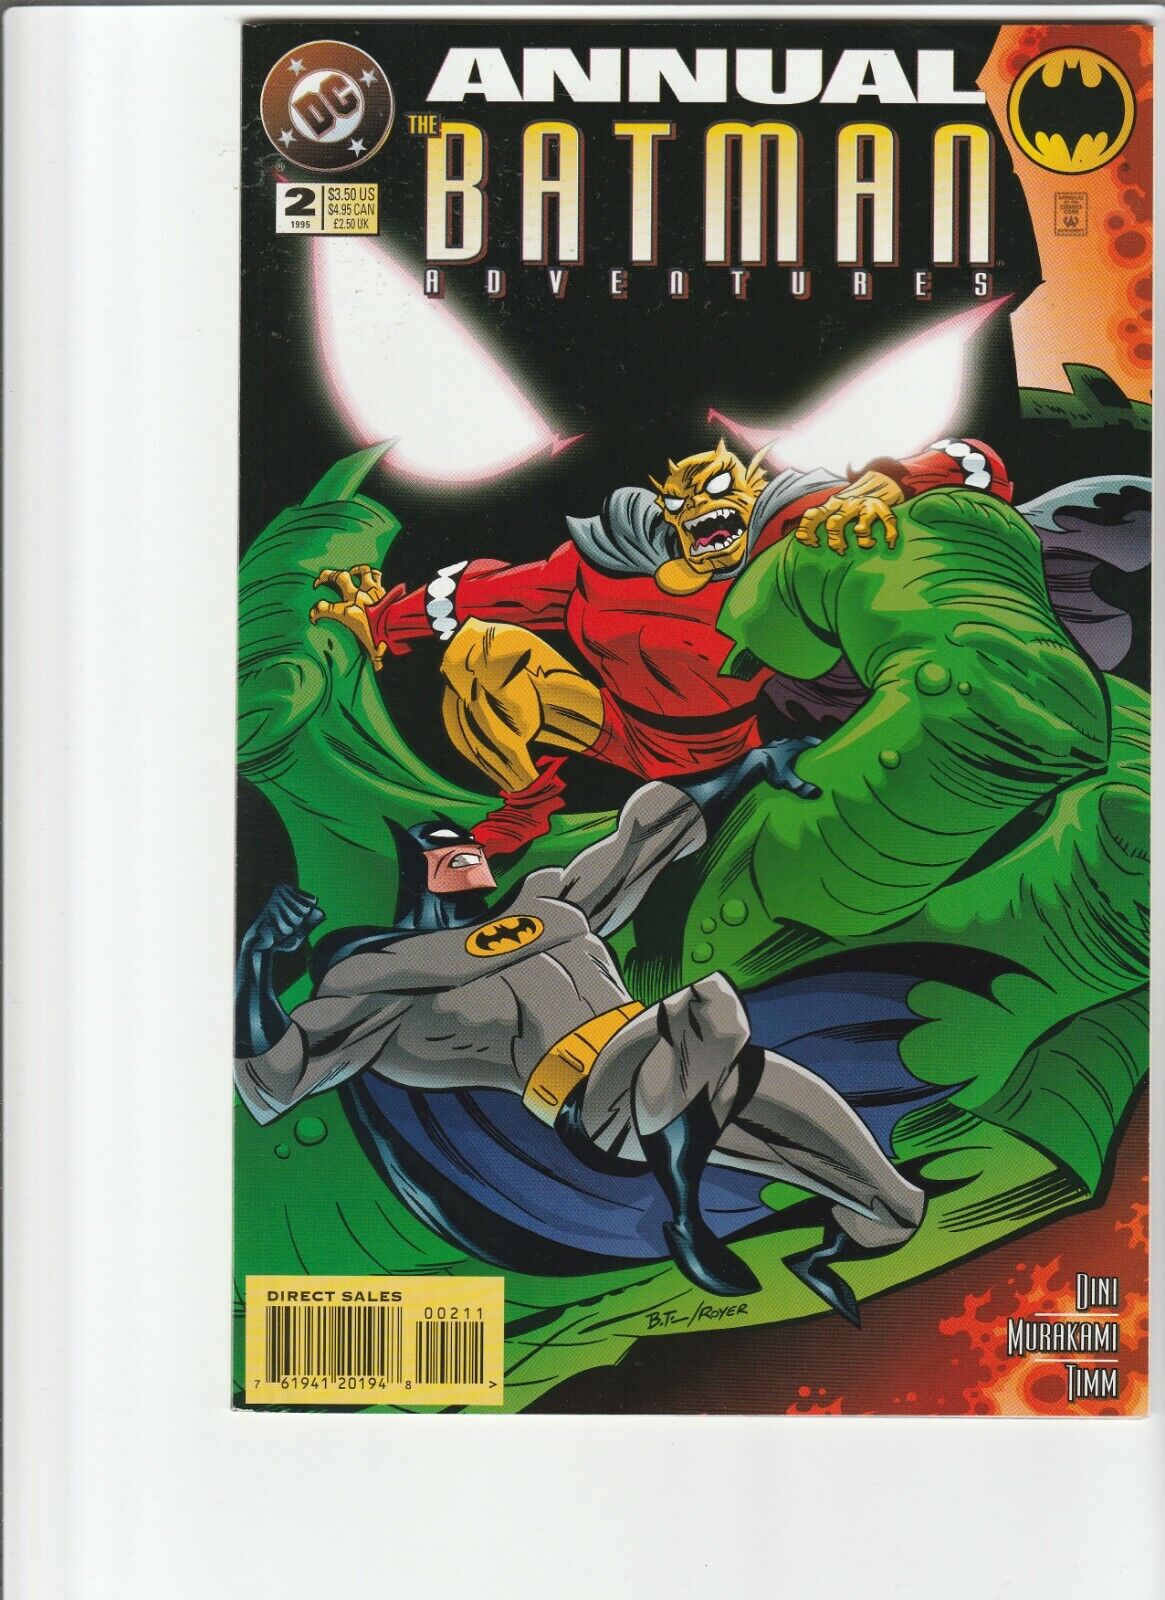 BATMAN ADVENTURES ANNUAL # 1  BRUCE TIMM 3 1992 ANIMATED SERIES  12